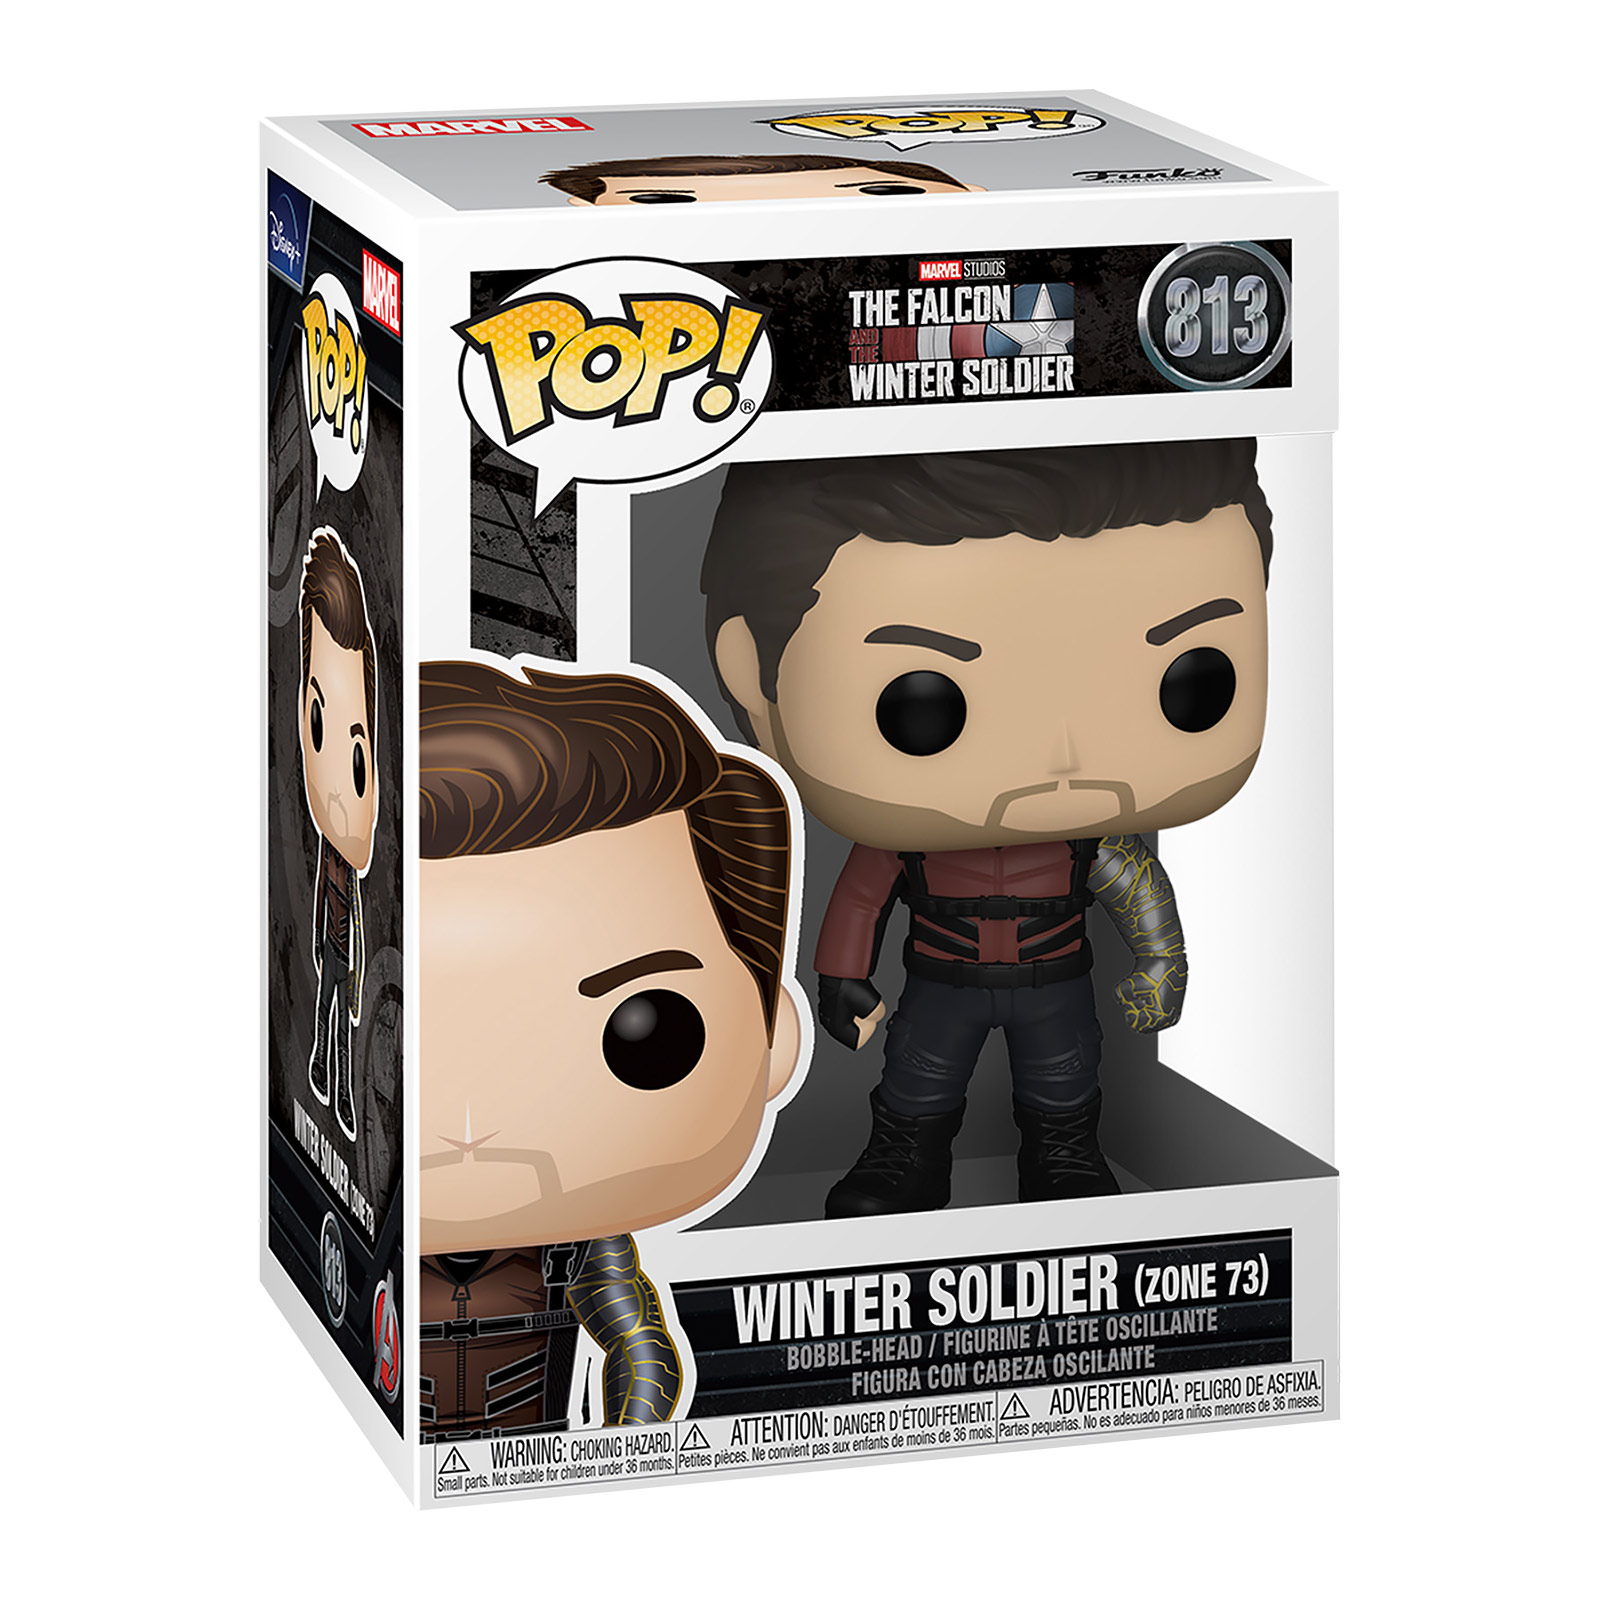 Winter Soldier Zone 73 Funko Pop Figure - The Falcon and the Winter Soldier